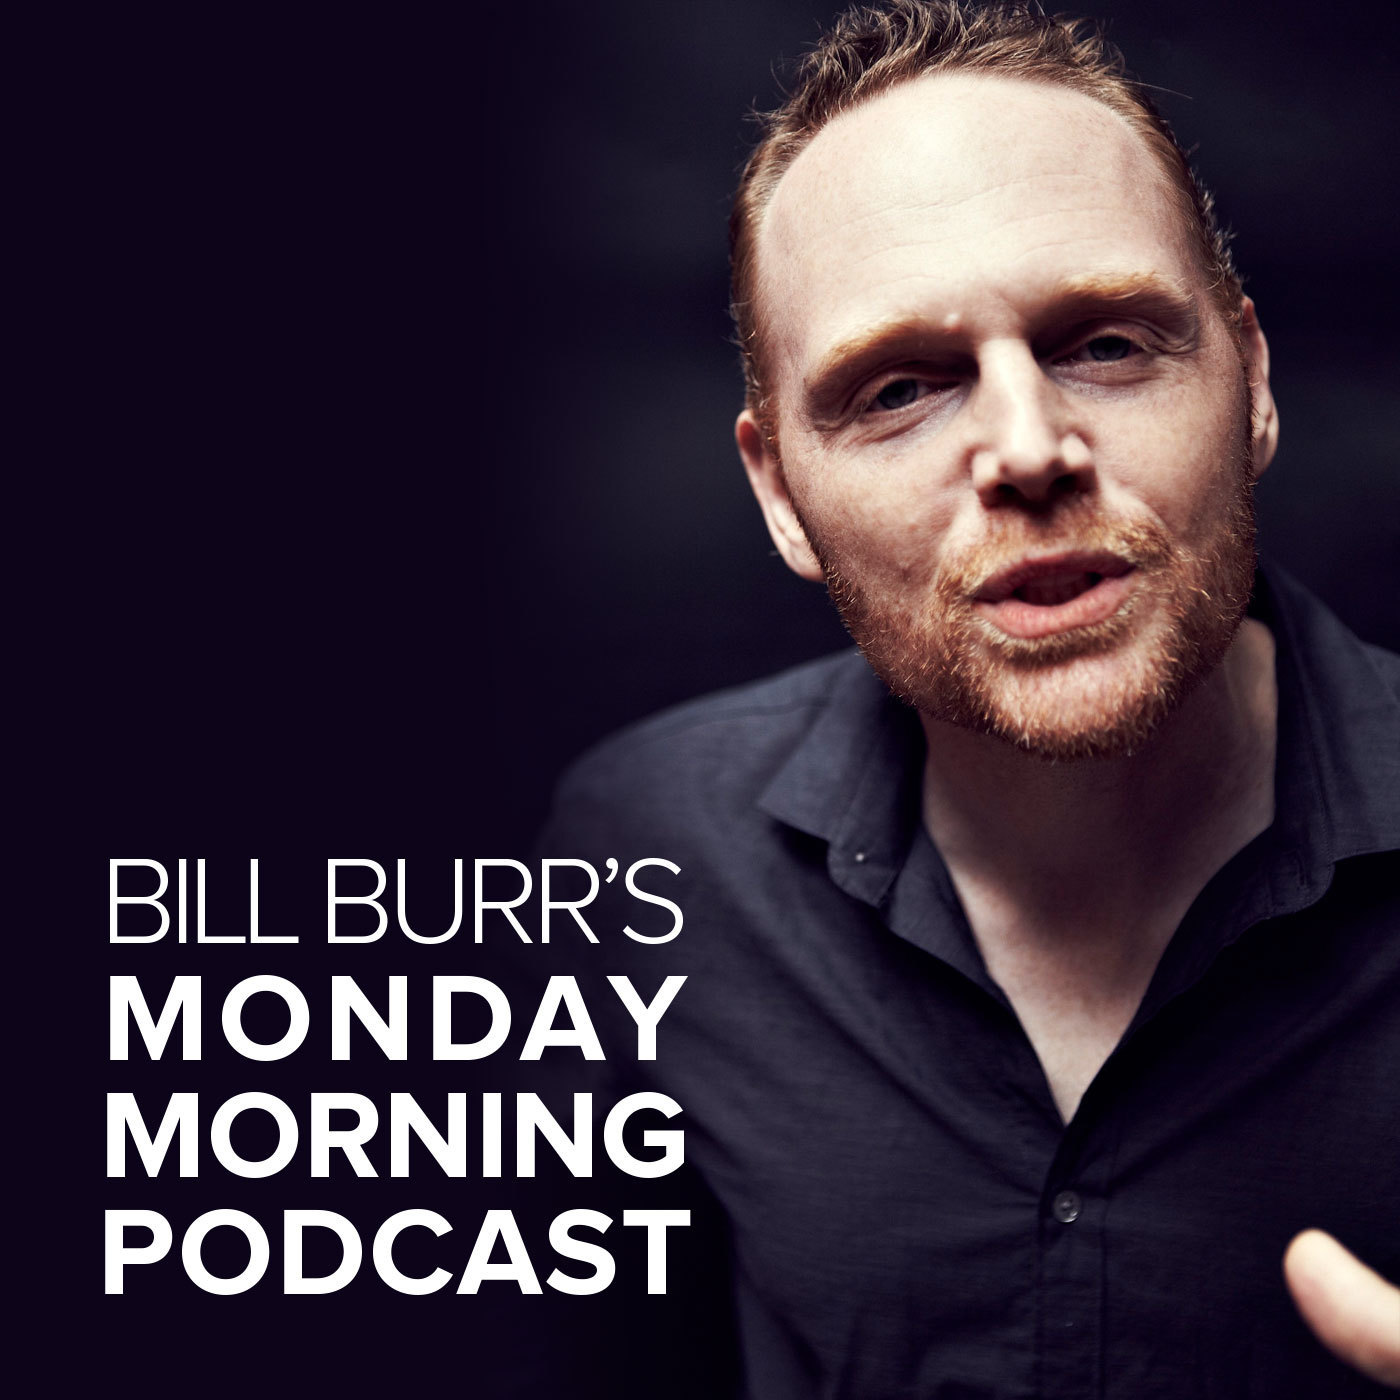 Monday Morning Podcast 11-14-16